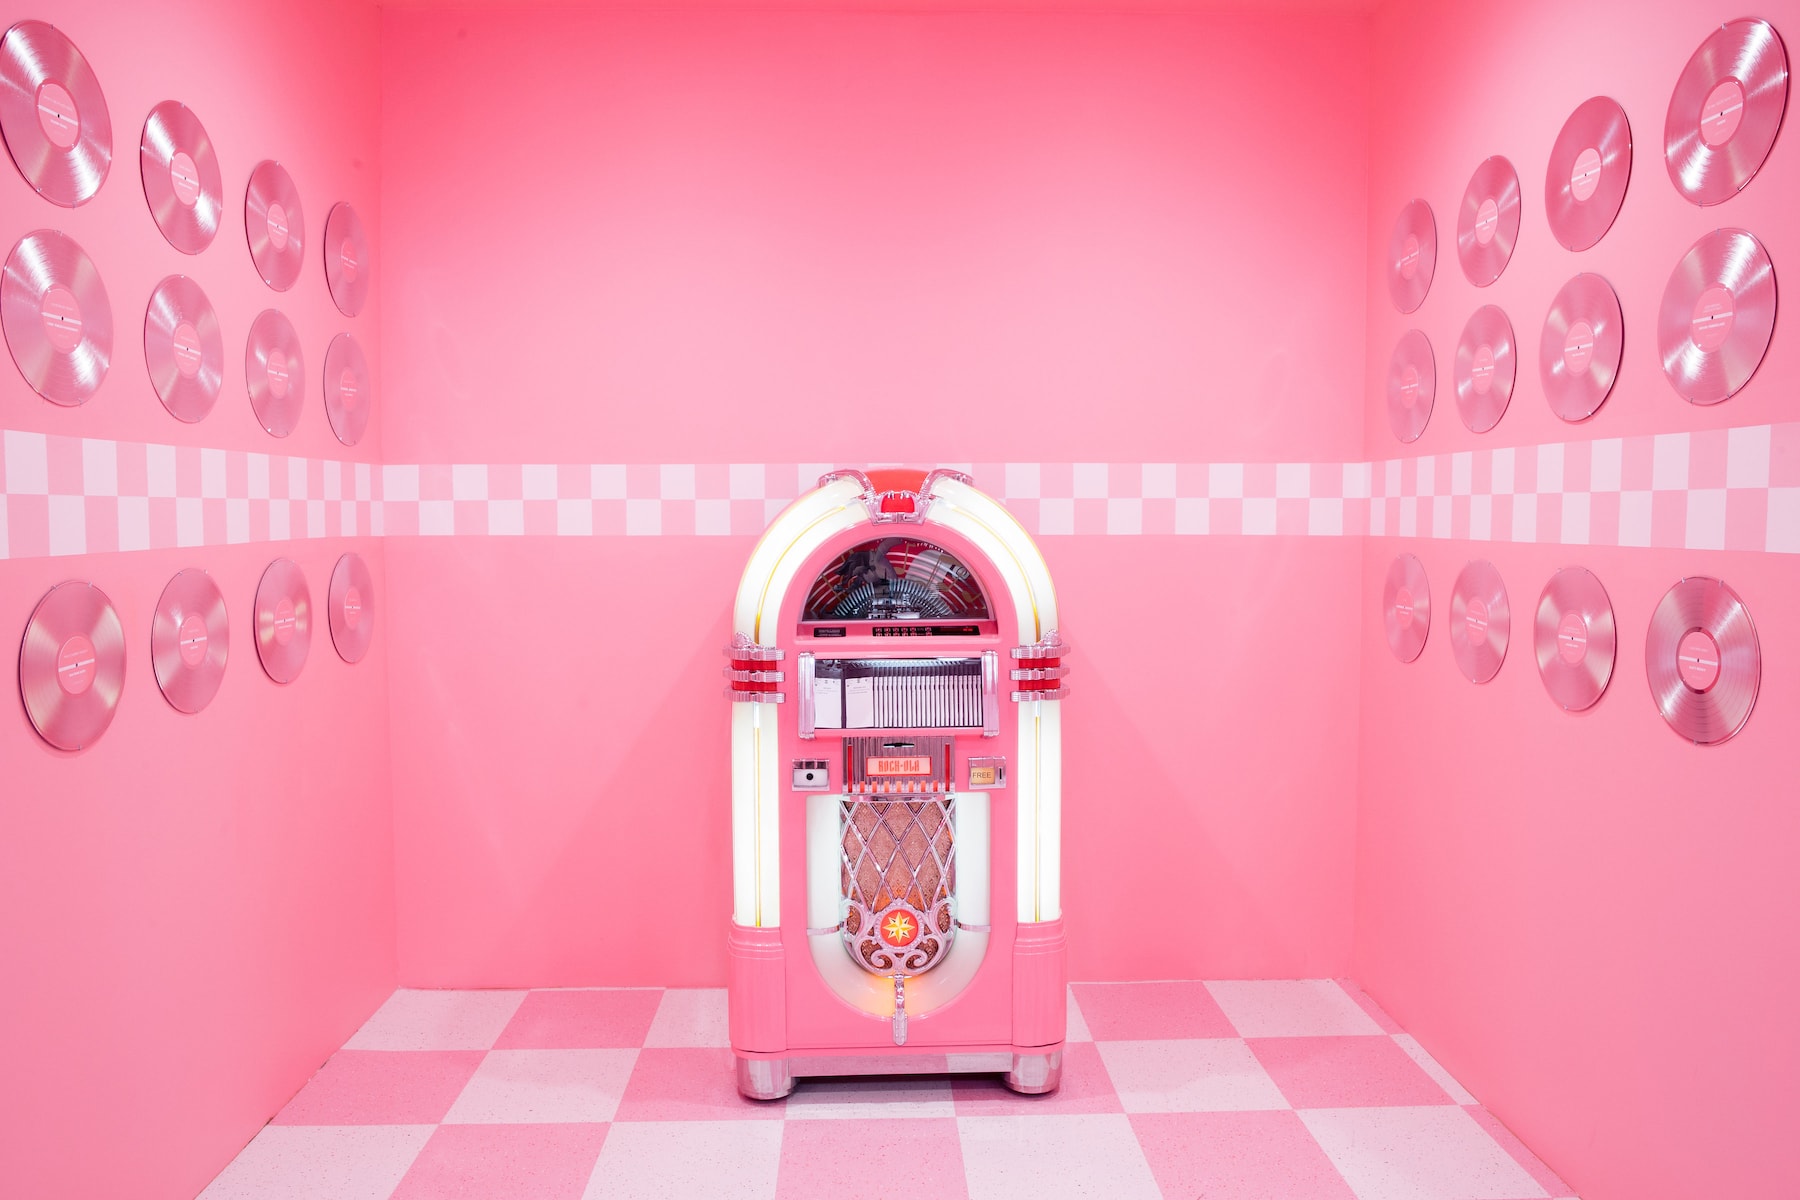 Museum of Ice Cream Opens Permanent Location San Fransisco Instagram Aesthetic Location